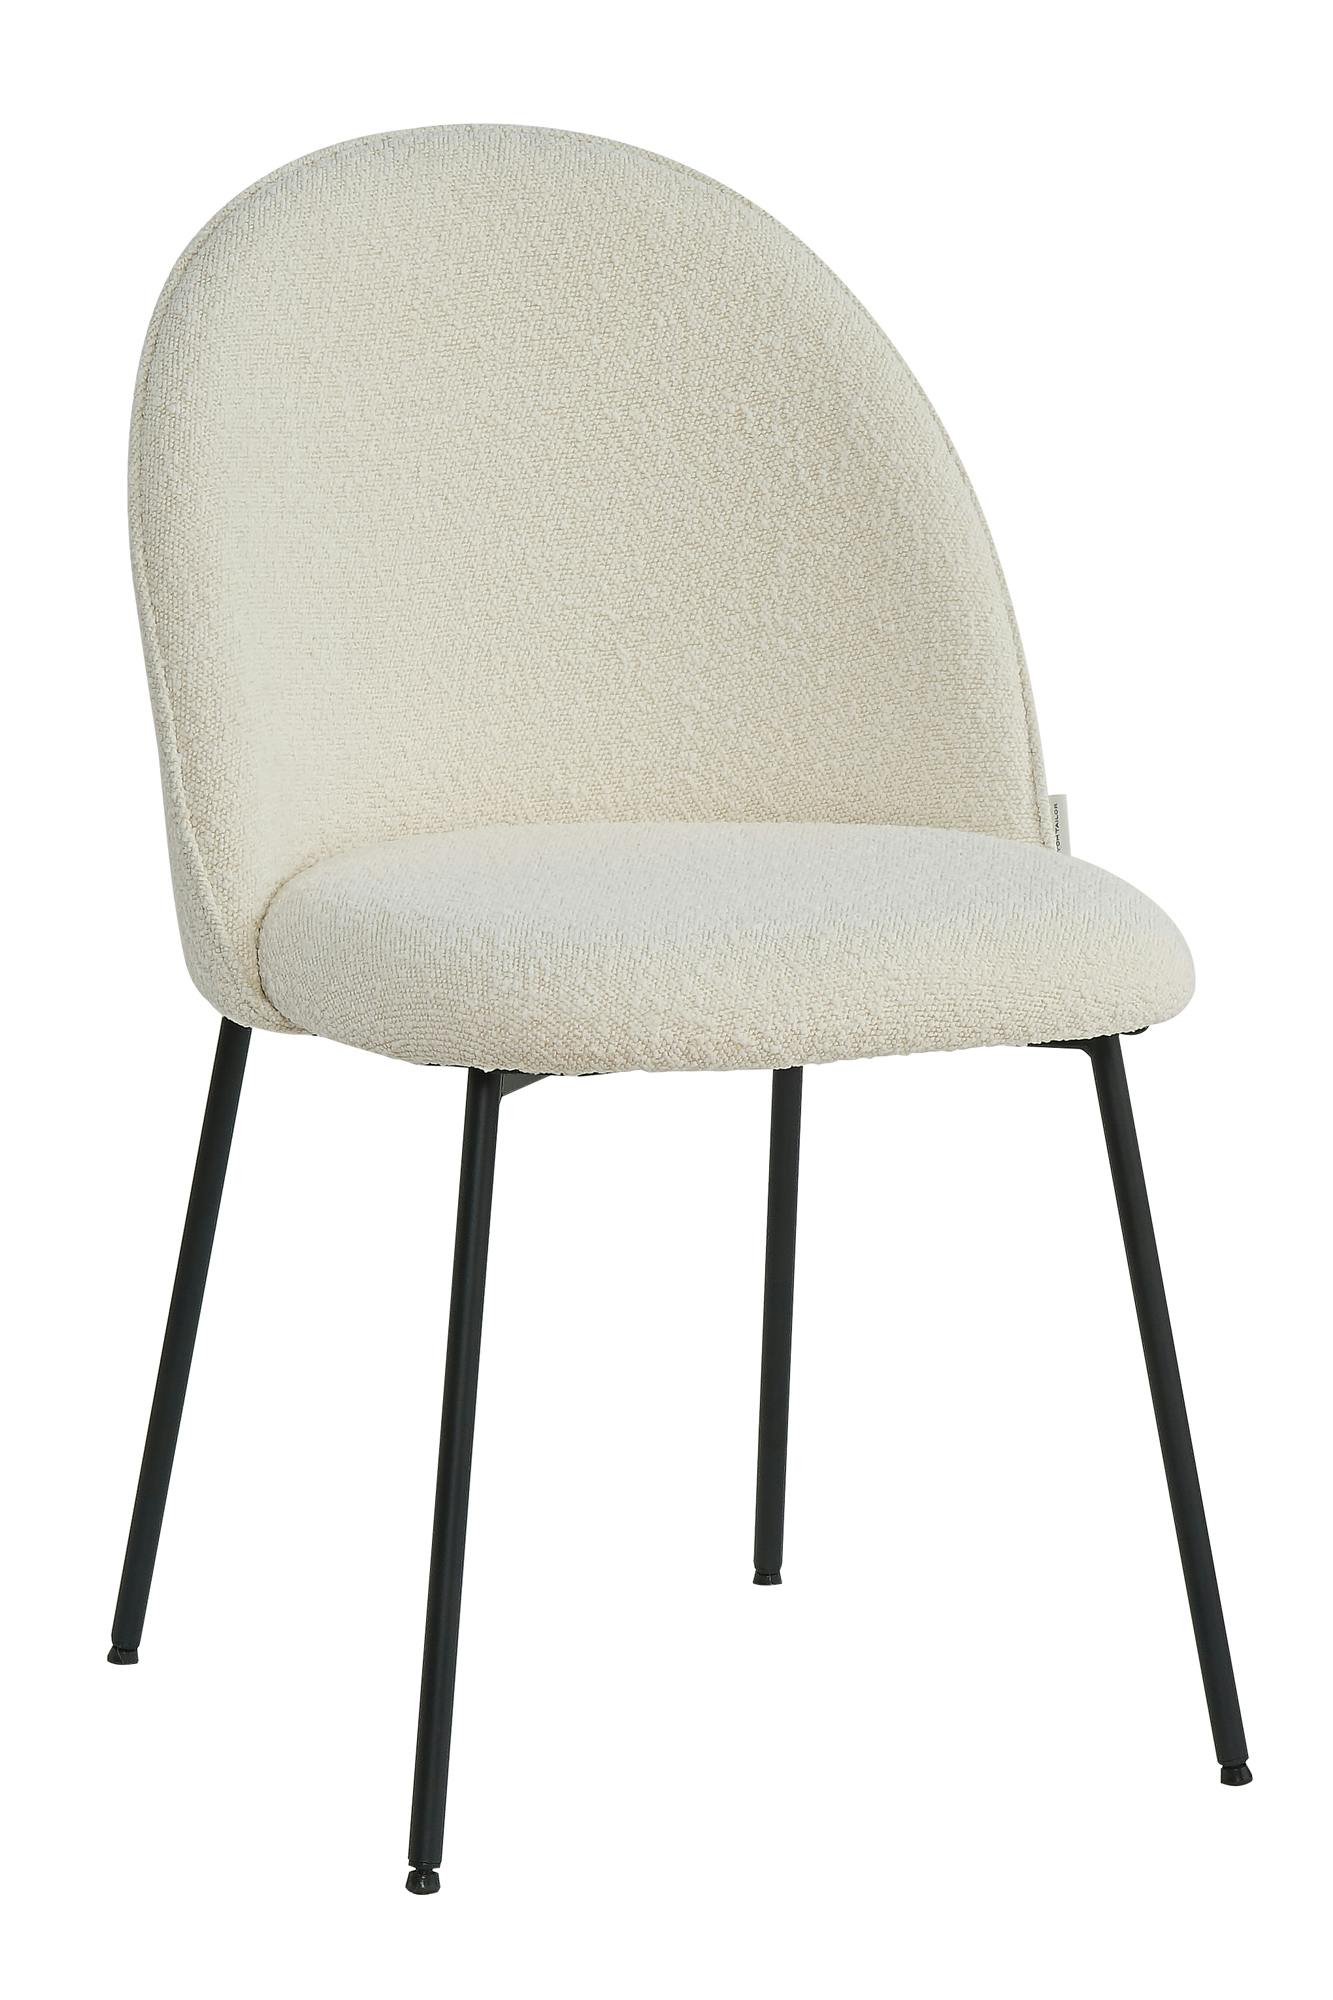 SIT Möbel Chair schwarz beige| Beine Stuhl SIT&CHAIRS | gepolstert METRO Pad | | |02412-03 | Metall 2er-Set Tom T-Bouclé Tailor B57xT54xH52cm |Serie Marktplatz